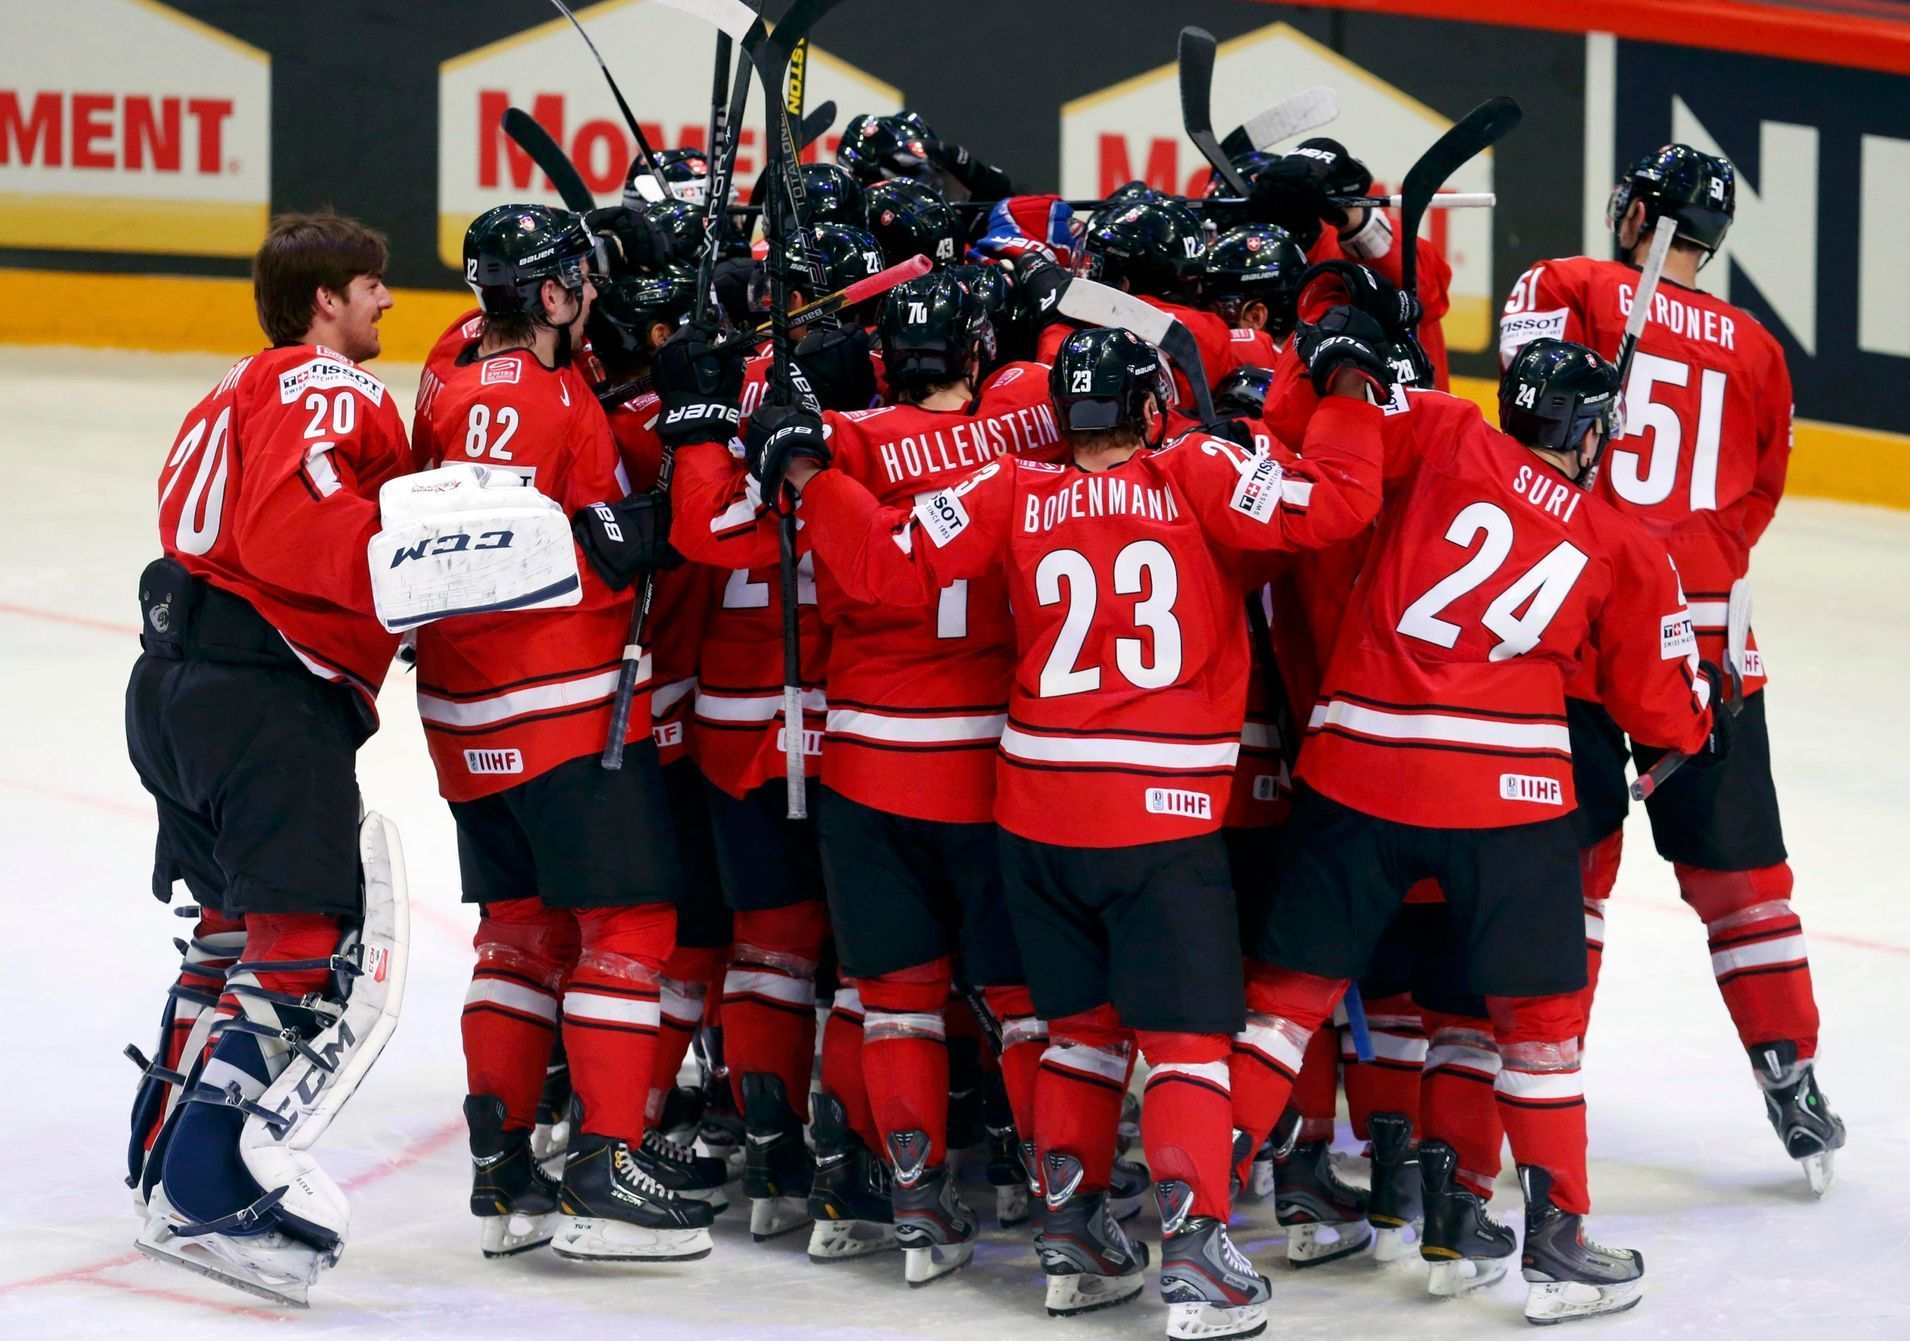 MS v hokeji 2013, Kanada - Švýcarsko: radost Švýcarů